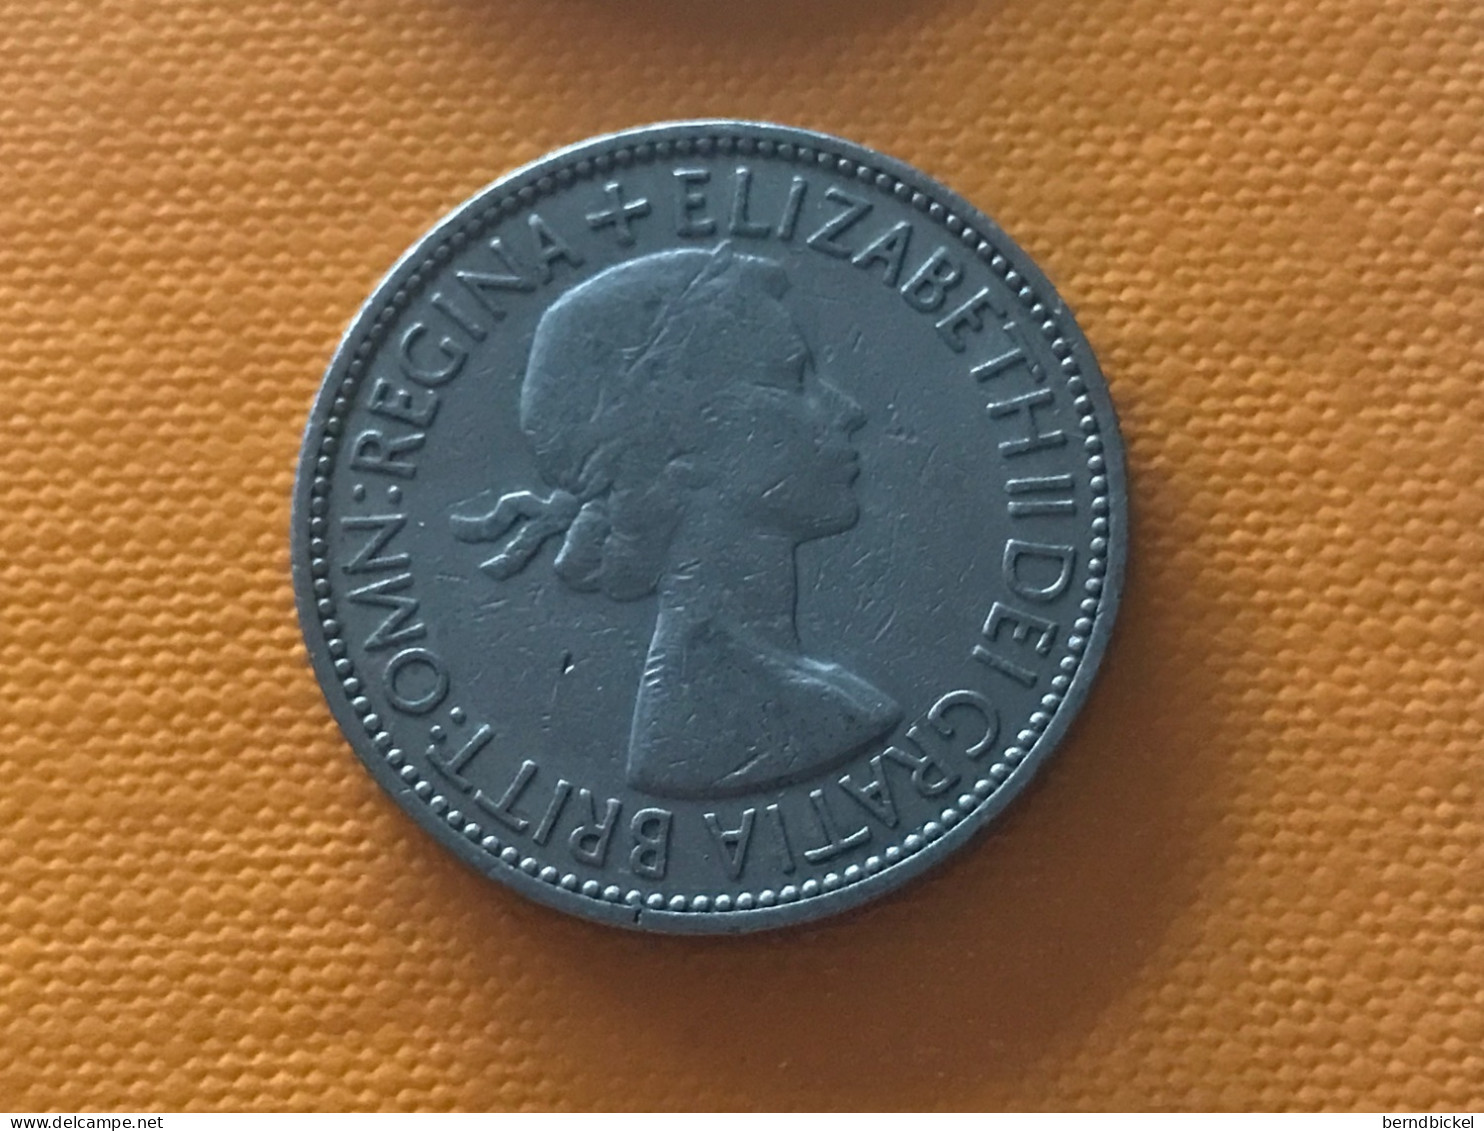 Münze Münzen Umlaufmünze Großbritannien 2 Shilling 1953 - J. 1 Florin / 2 Schillings